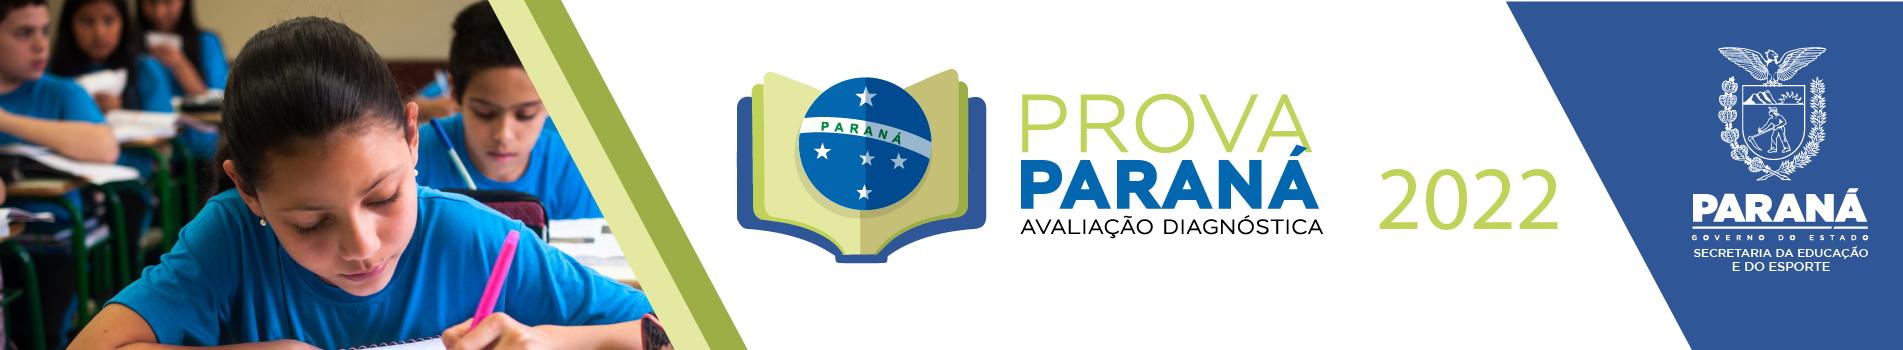 Banner Prova Paraná 2022